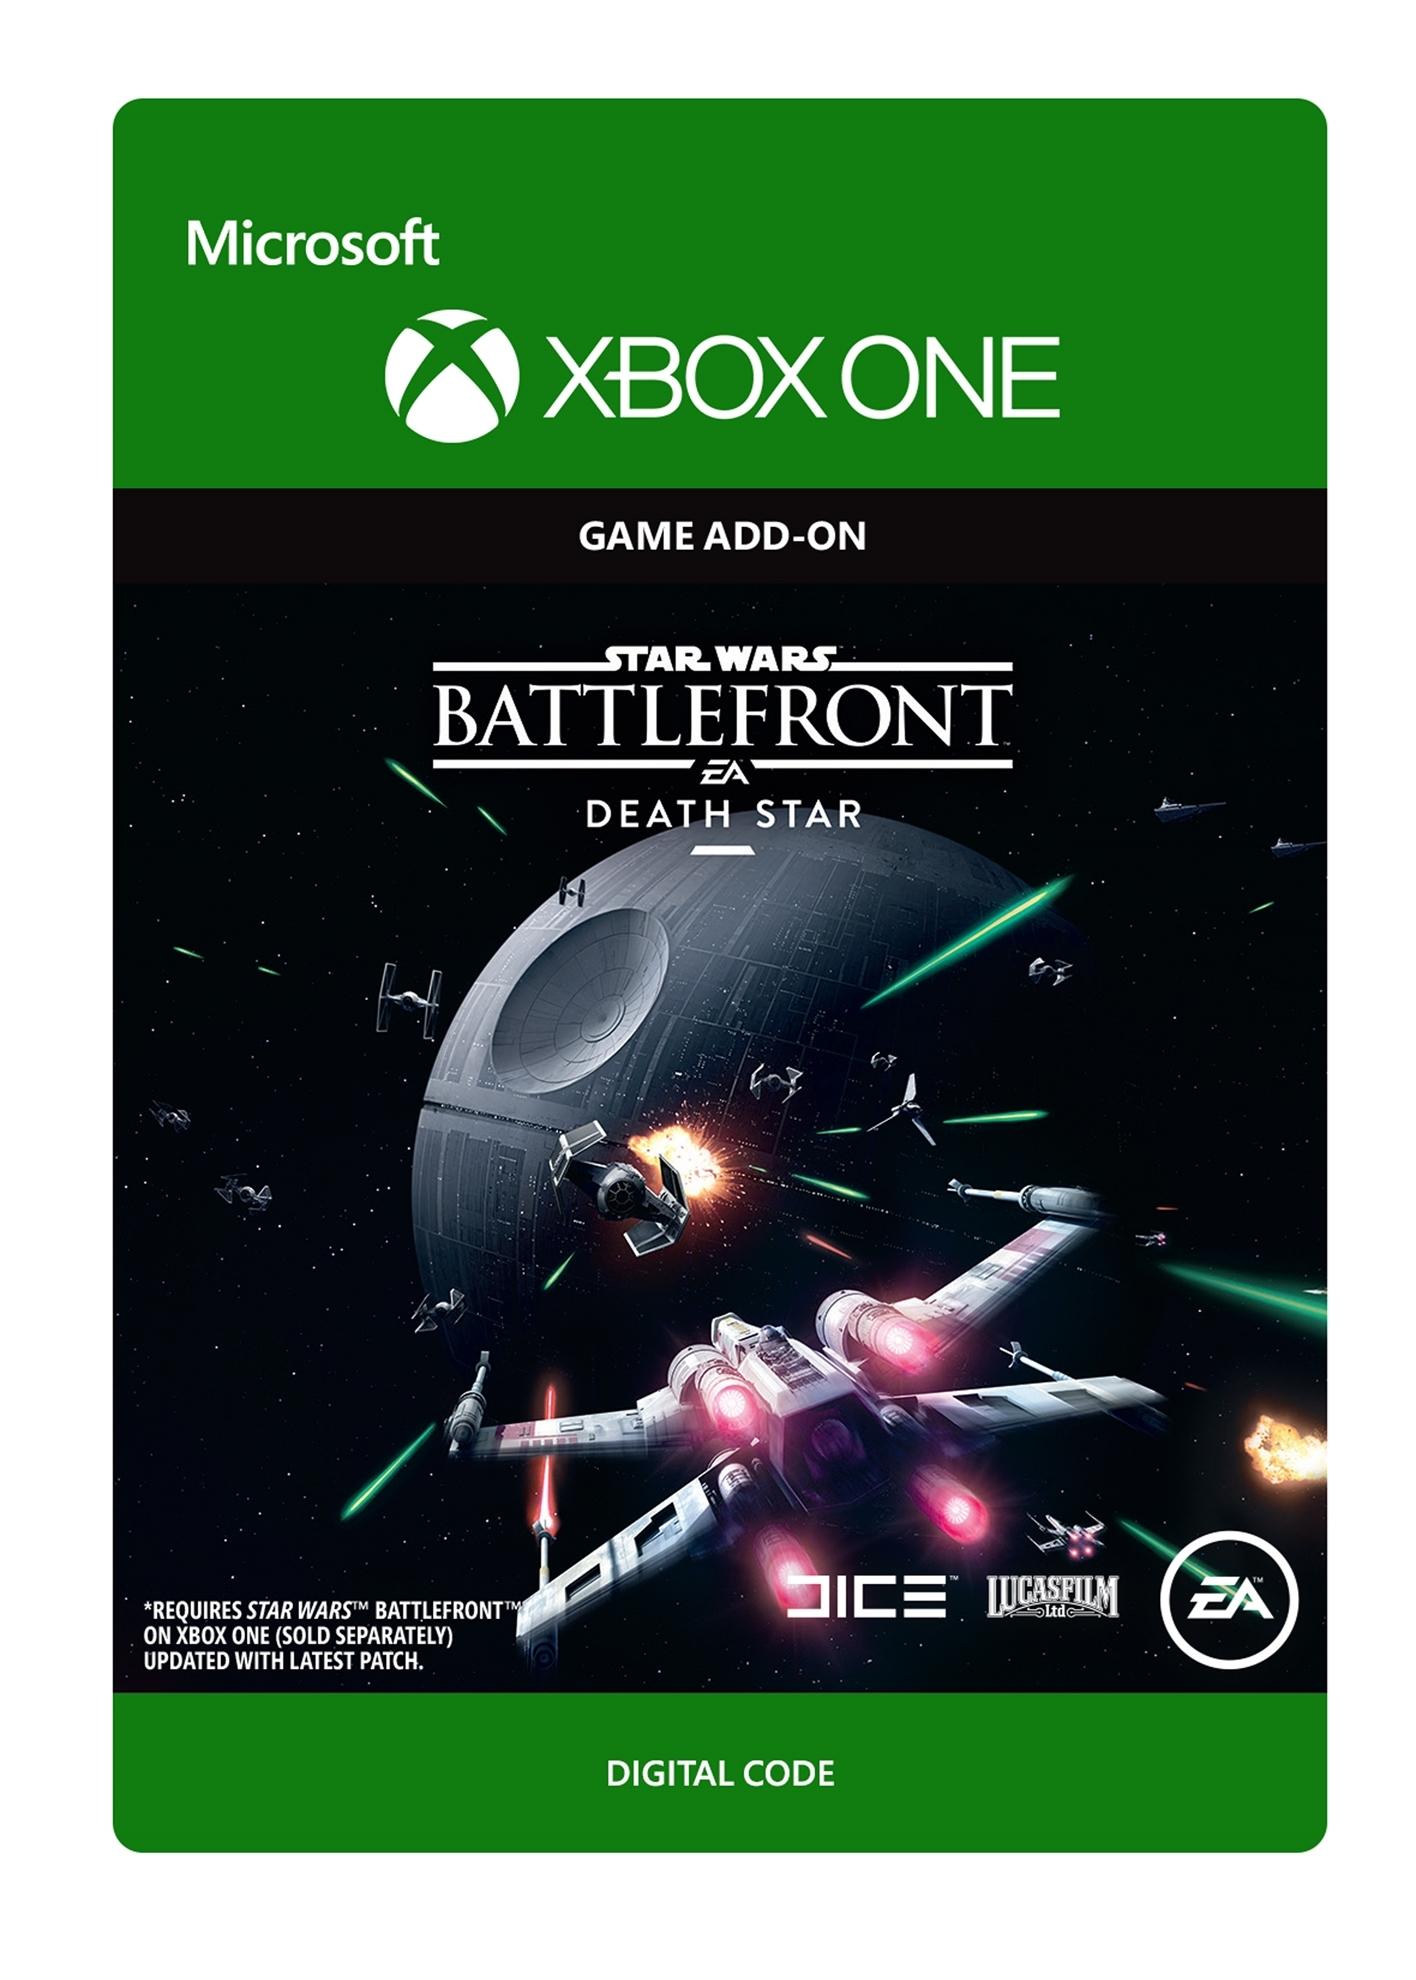 Star Wars Battlefront: Death Star DLC | 7D4-00136 (a30b94b2-9563-43d3-99cb-cdcf8c2ec46f)